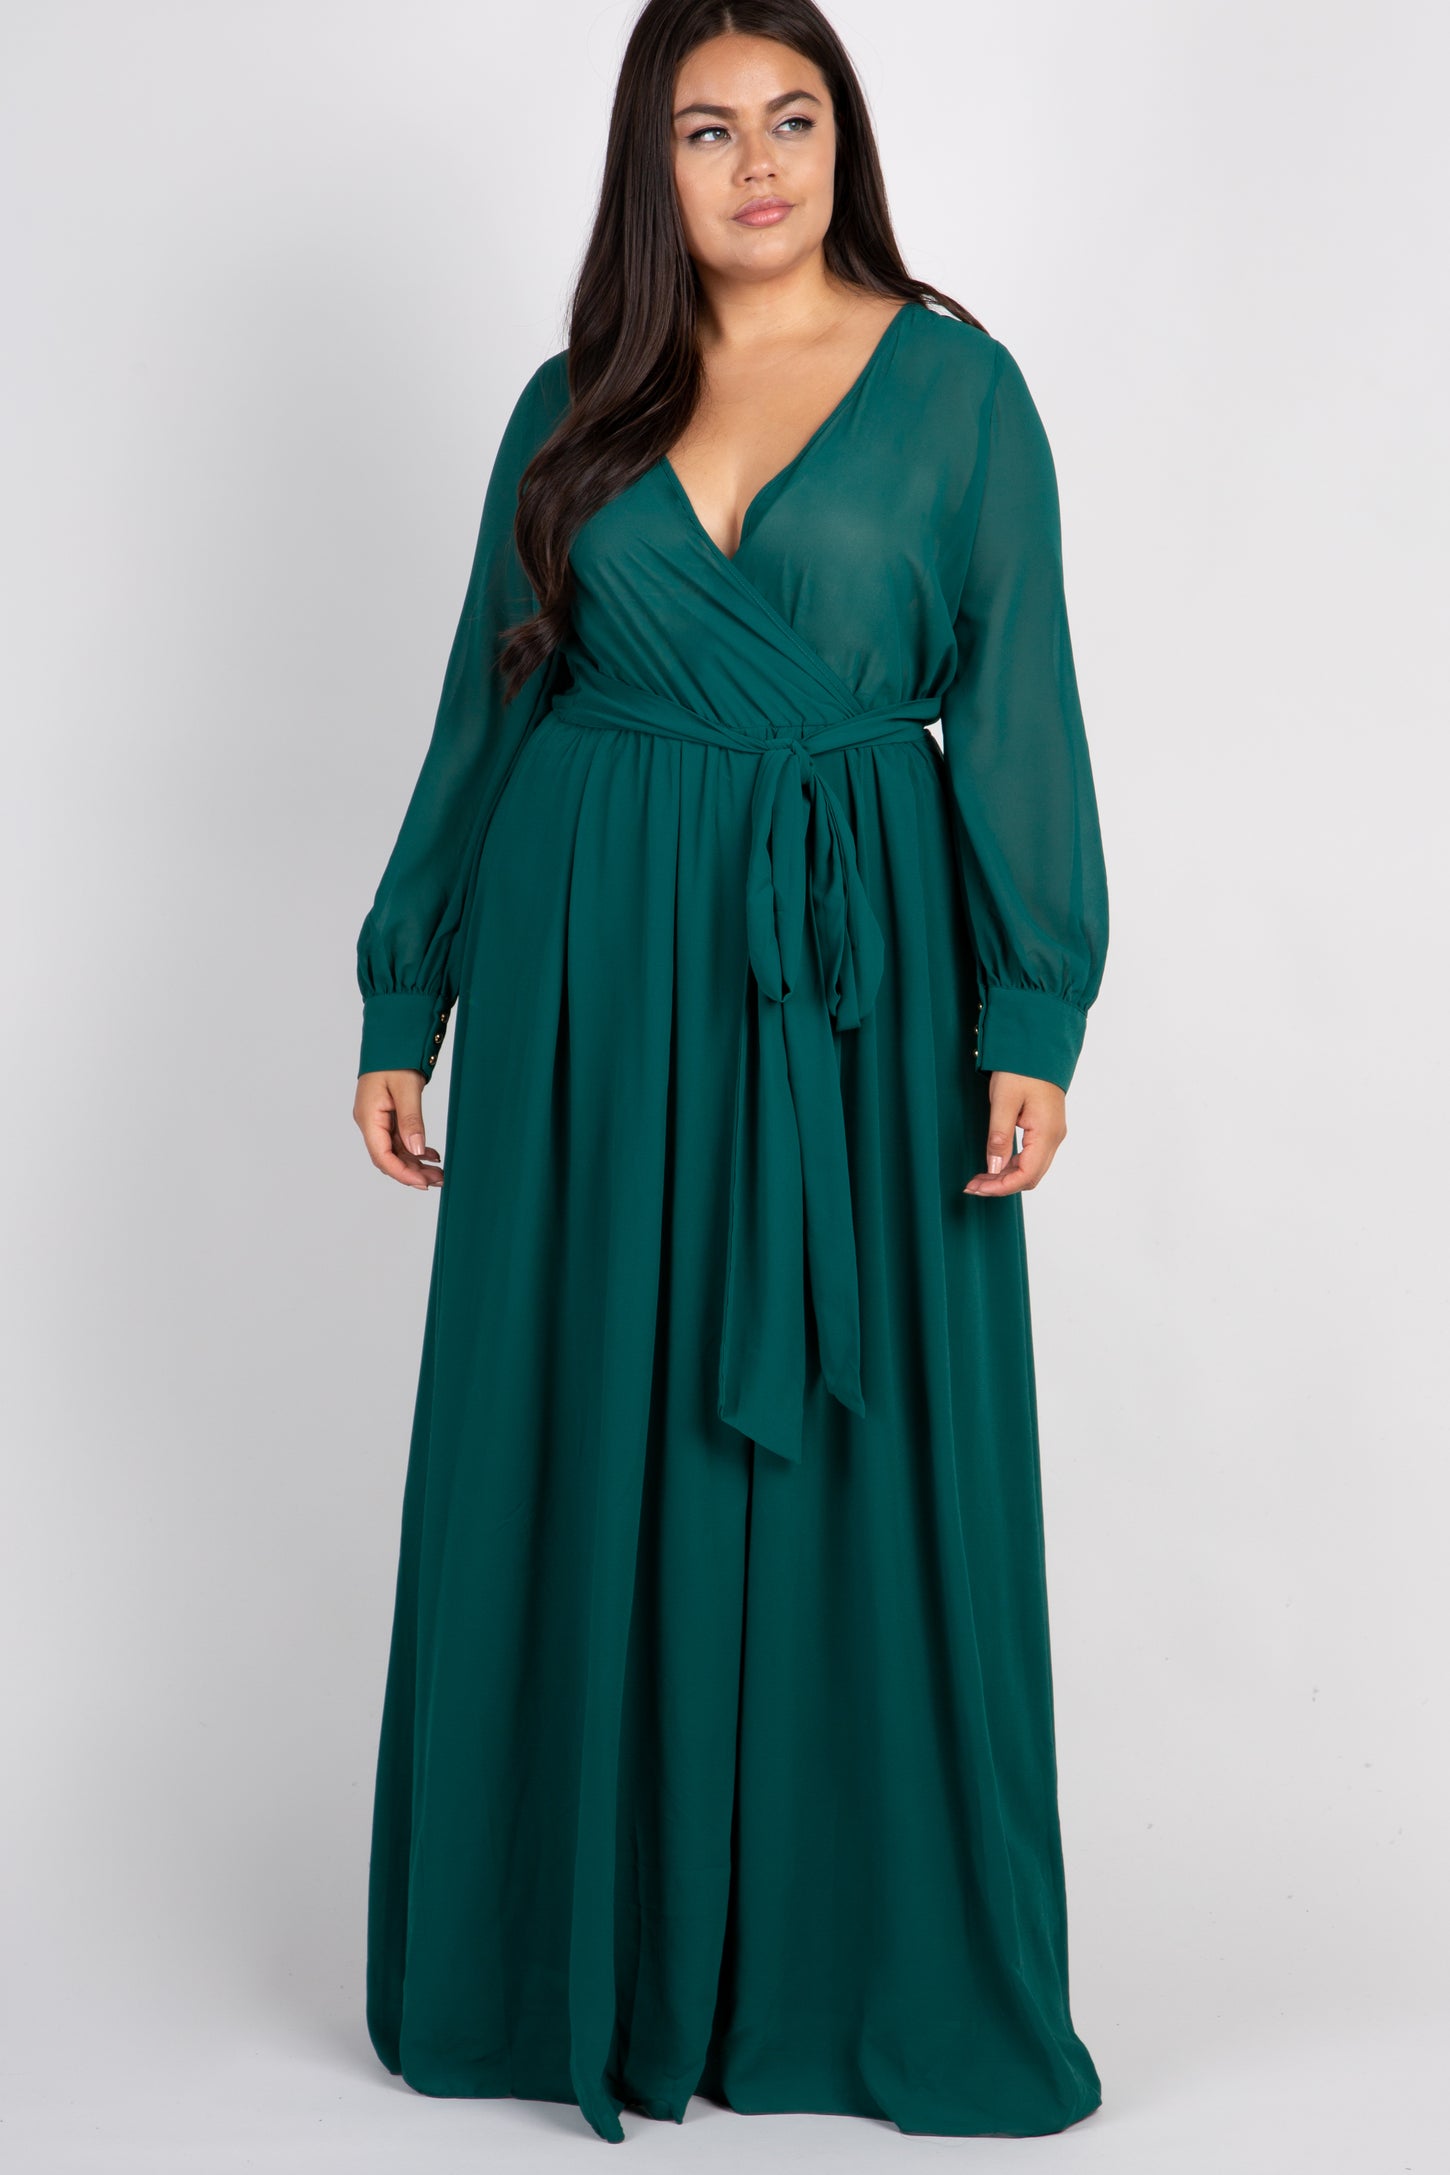 Green Chiffon Long Sleeve Pleated Plus Maternity Maxi Dress